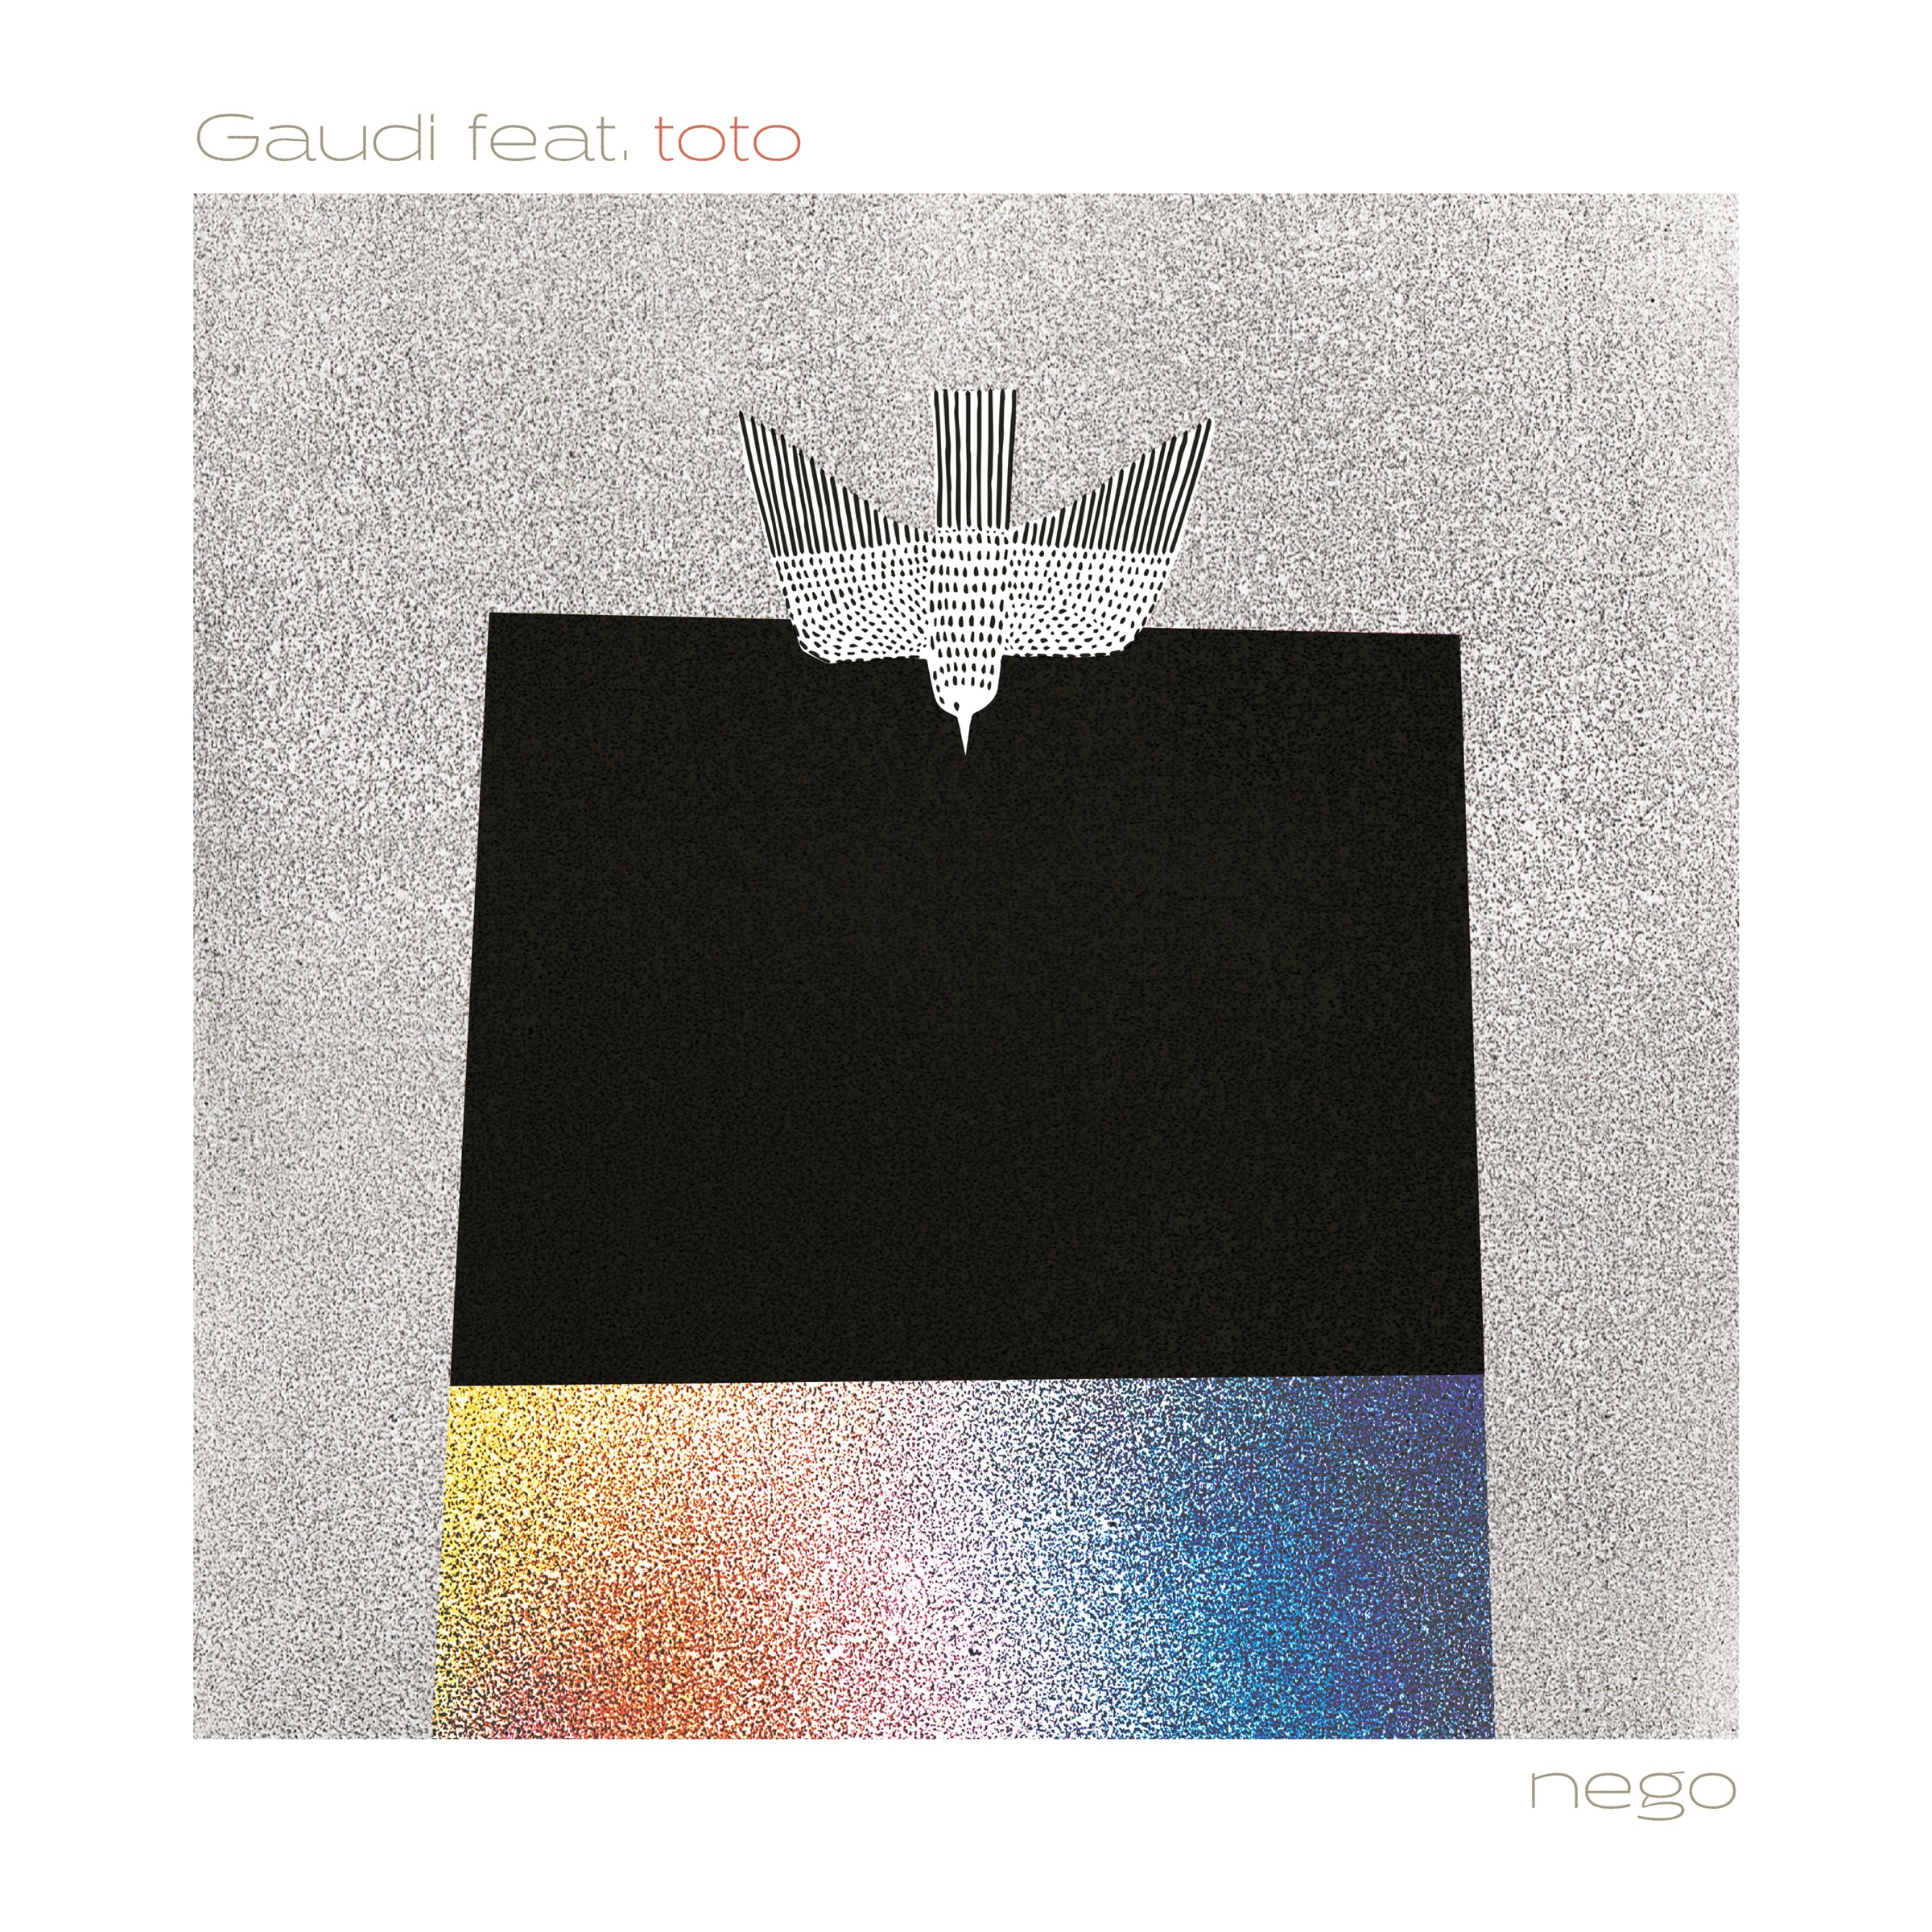 nego、詩人totoとの共作「Gaudi feat. toto」を発表のサブ画像1_「Gaudi feat. toto」アートワーク